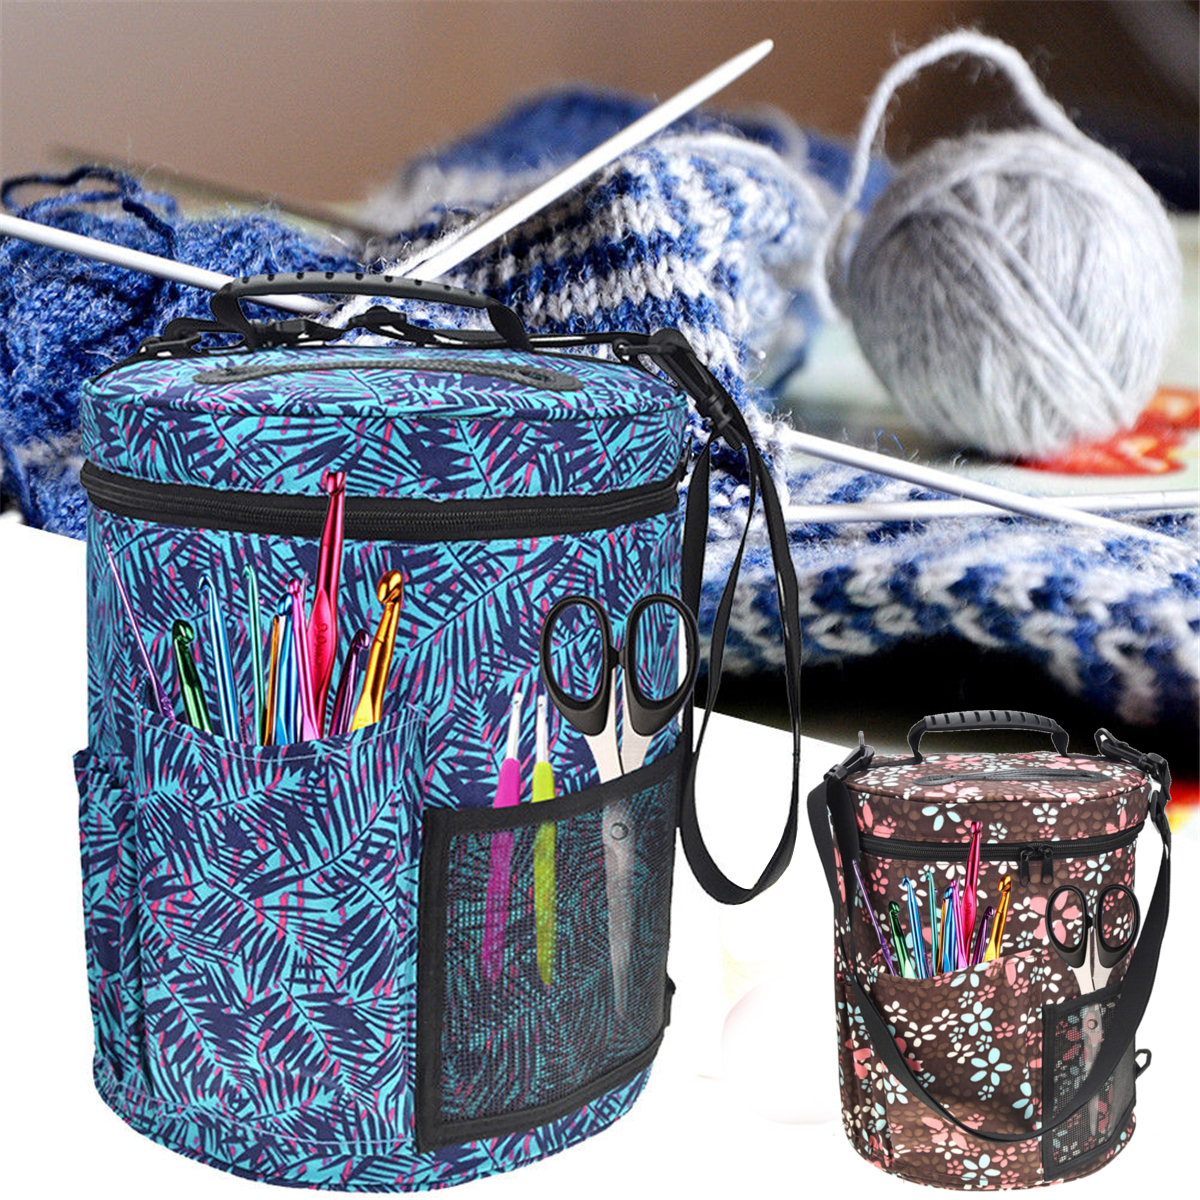 Details About Woolen Yarn Storage Bag Knitting Crochet Ball Holder Tote Organizer Bag Basket